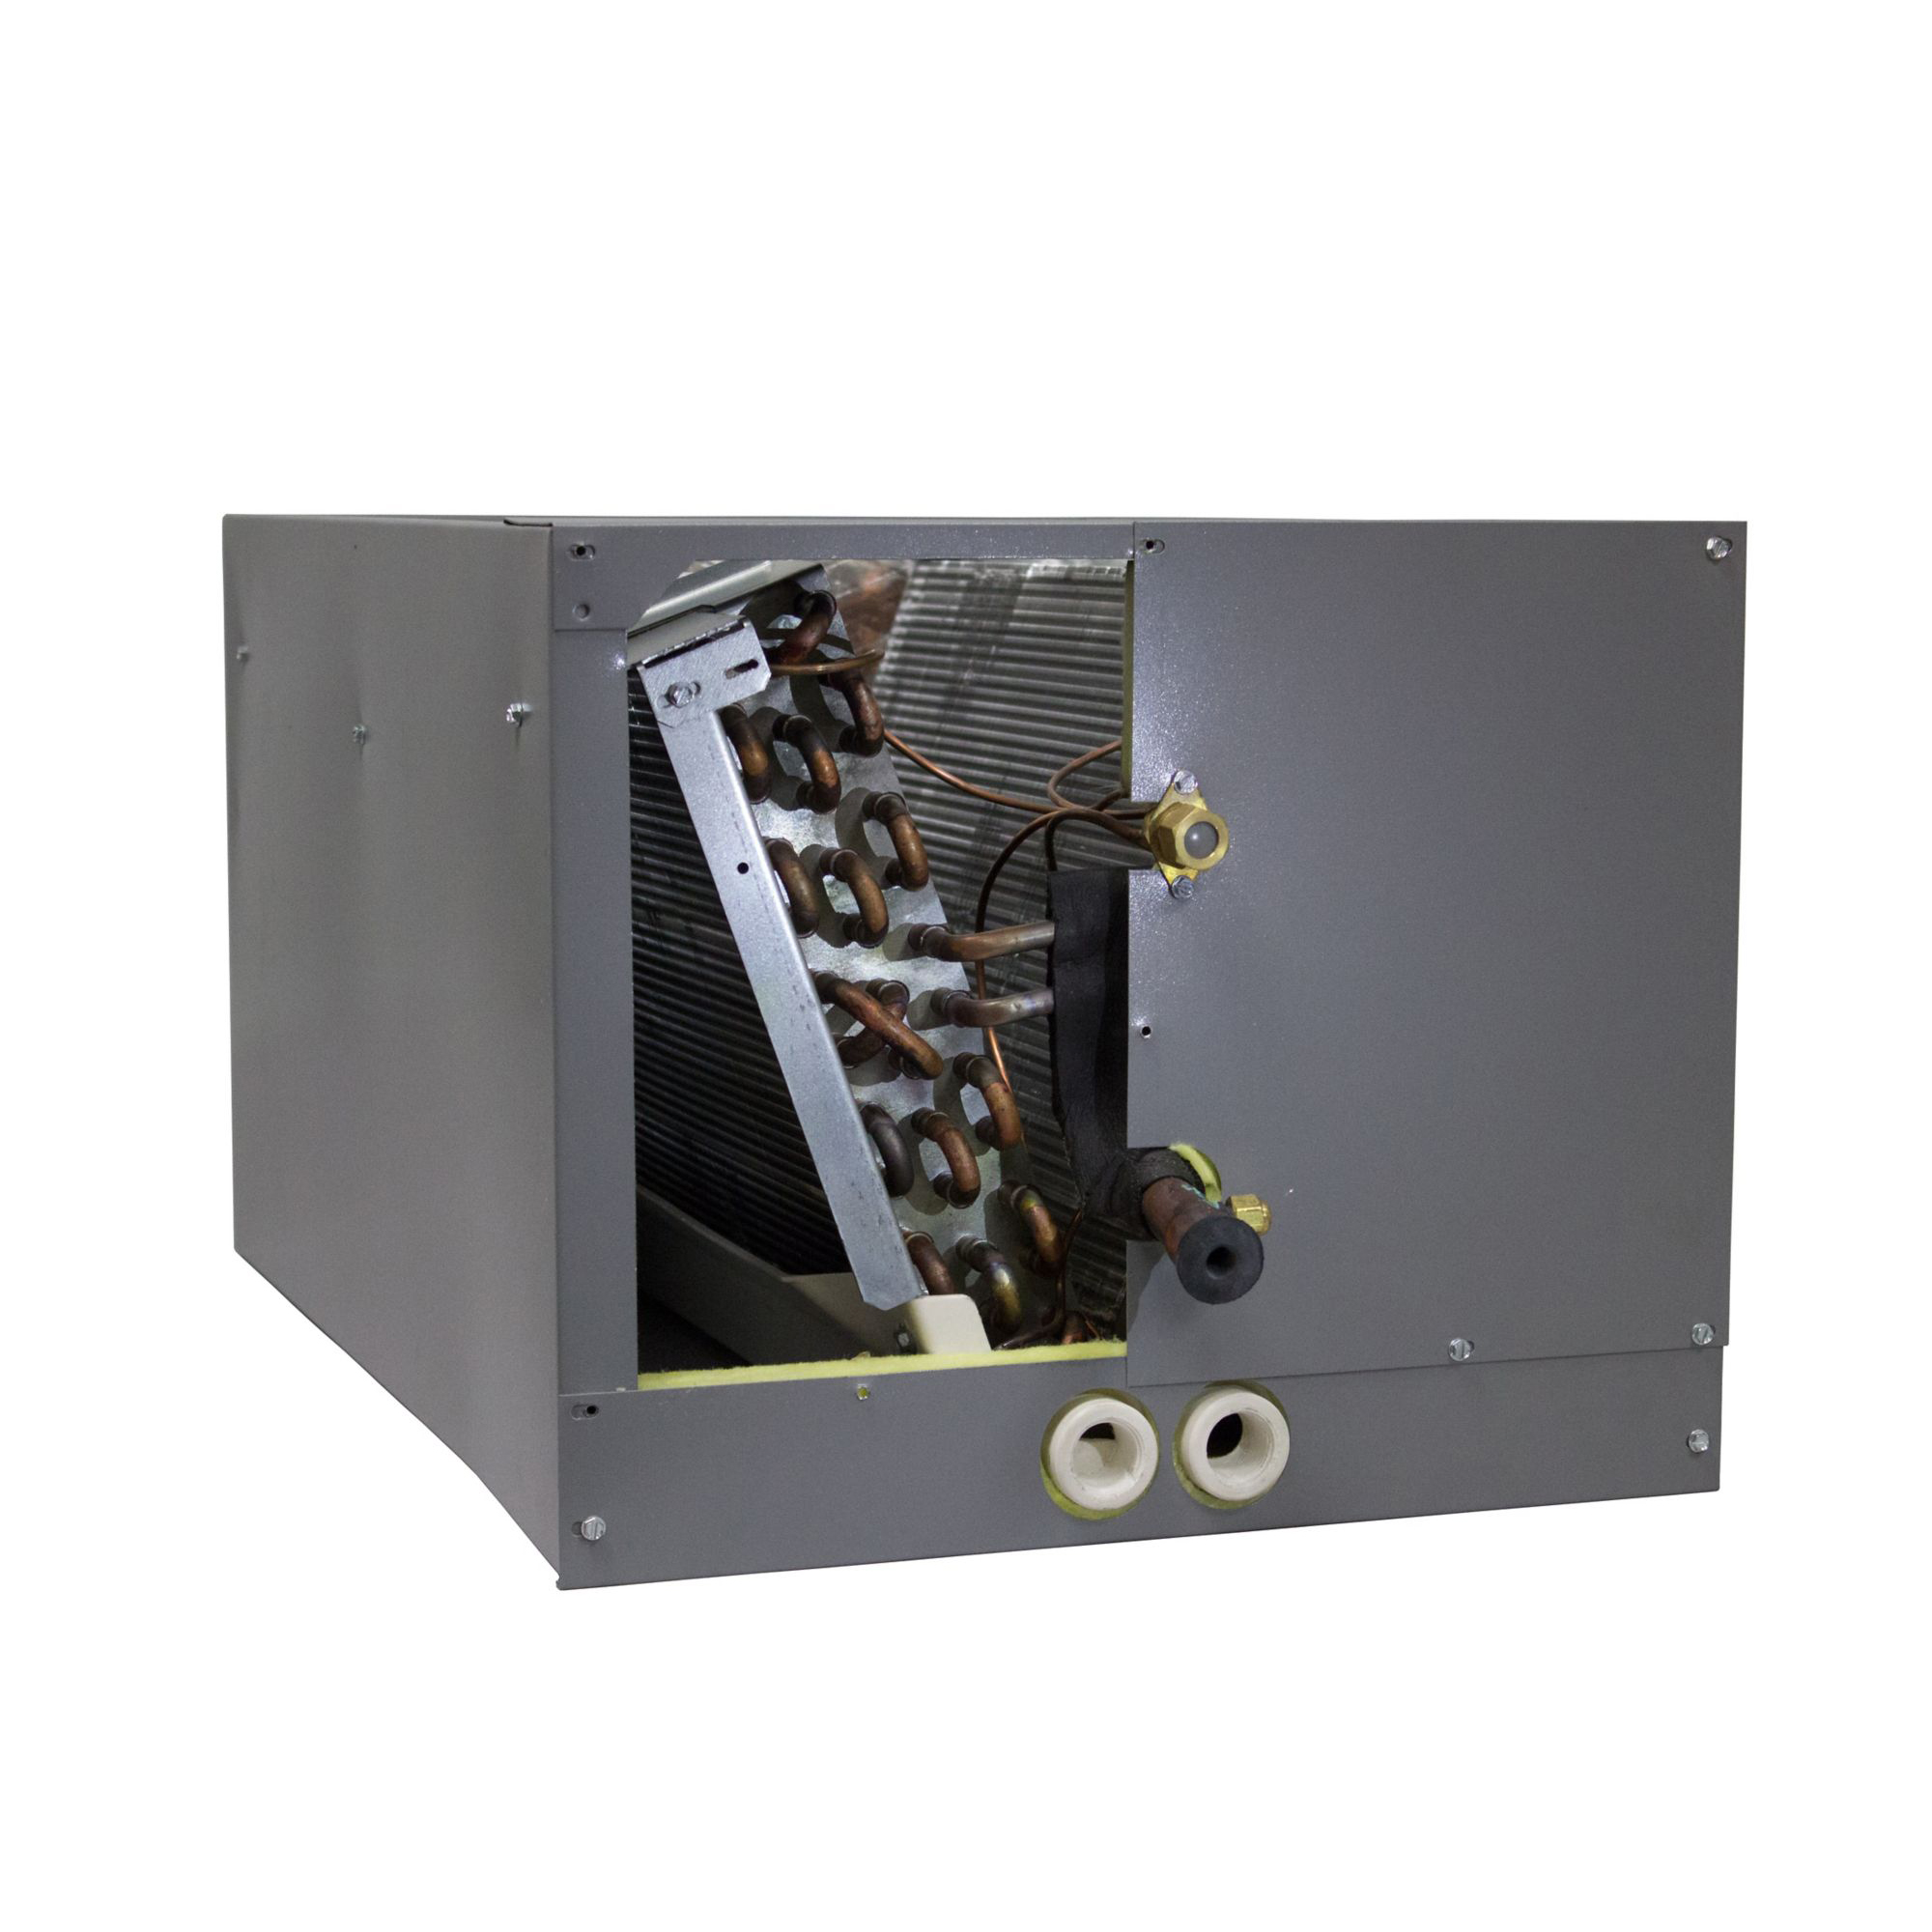 Allied™ 1.911483 1 Series Evaporator Coil, 3 ton Nominal, Downflow Air Flow, Cased Enclosure, R-22/R-410A Refrigerant